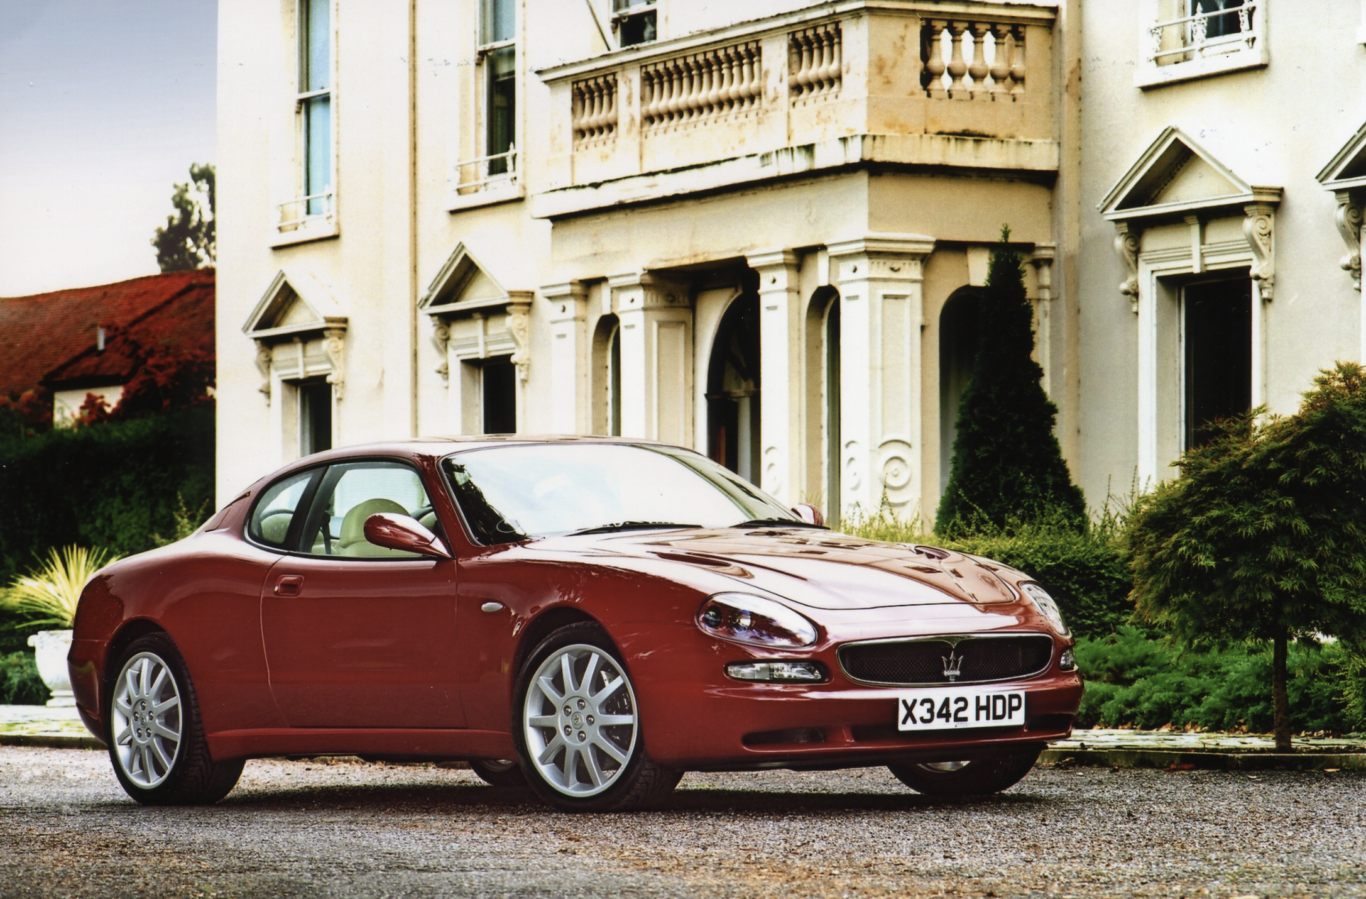 Maserati's 3200 featured a striking exterior design